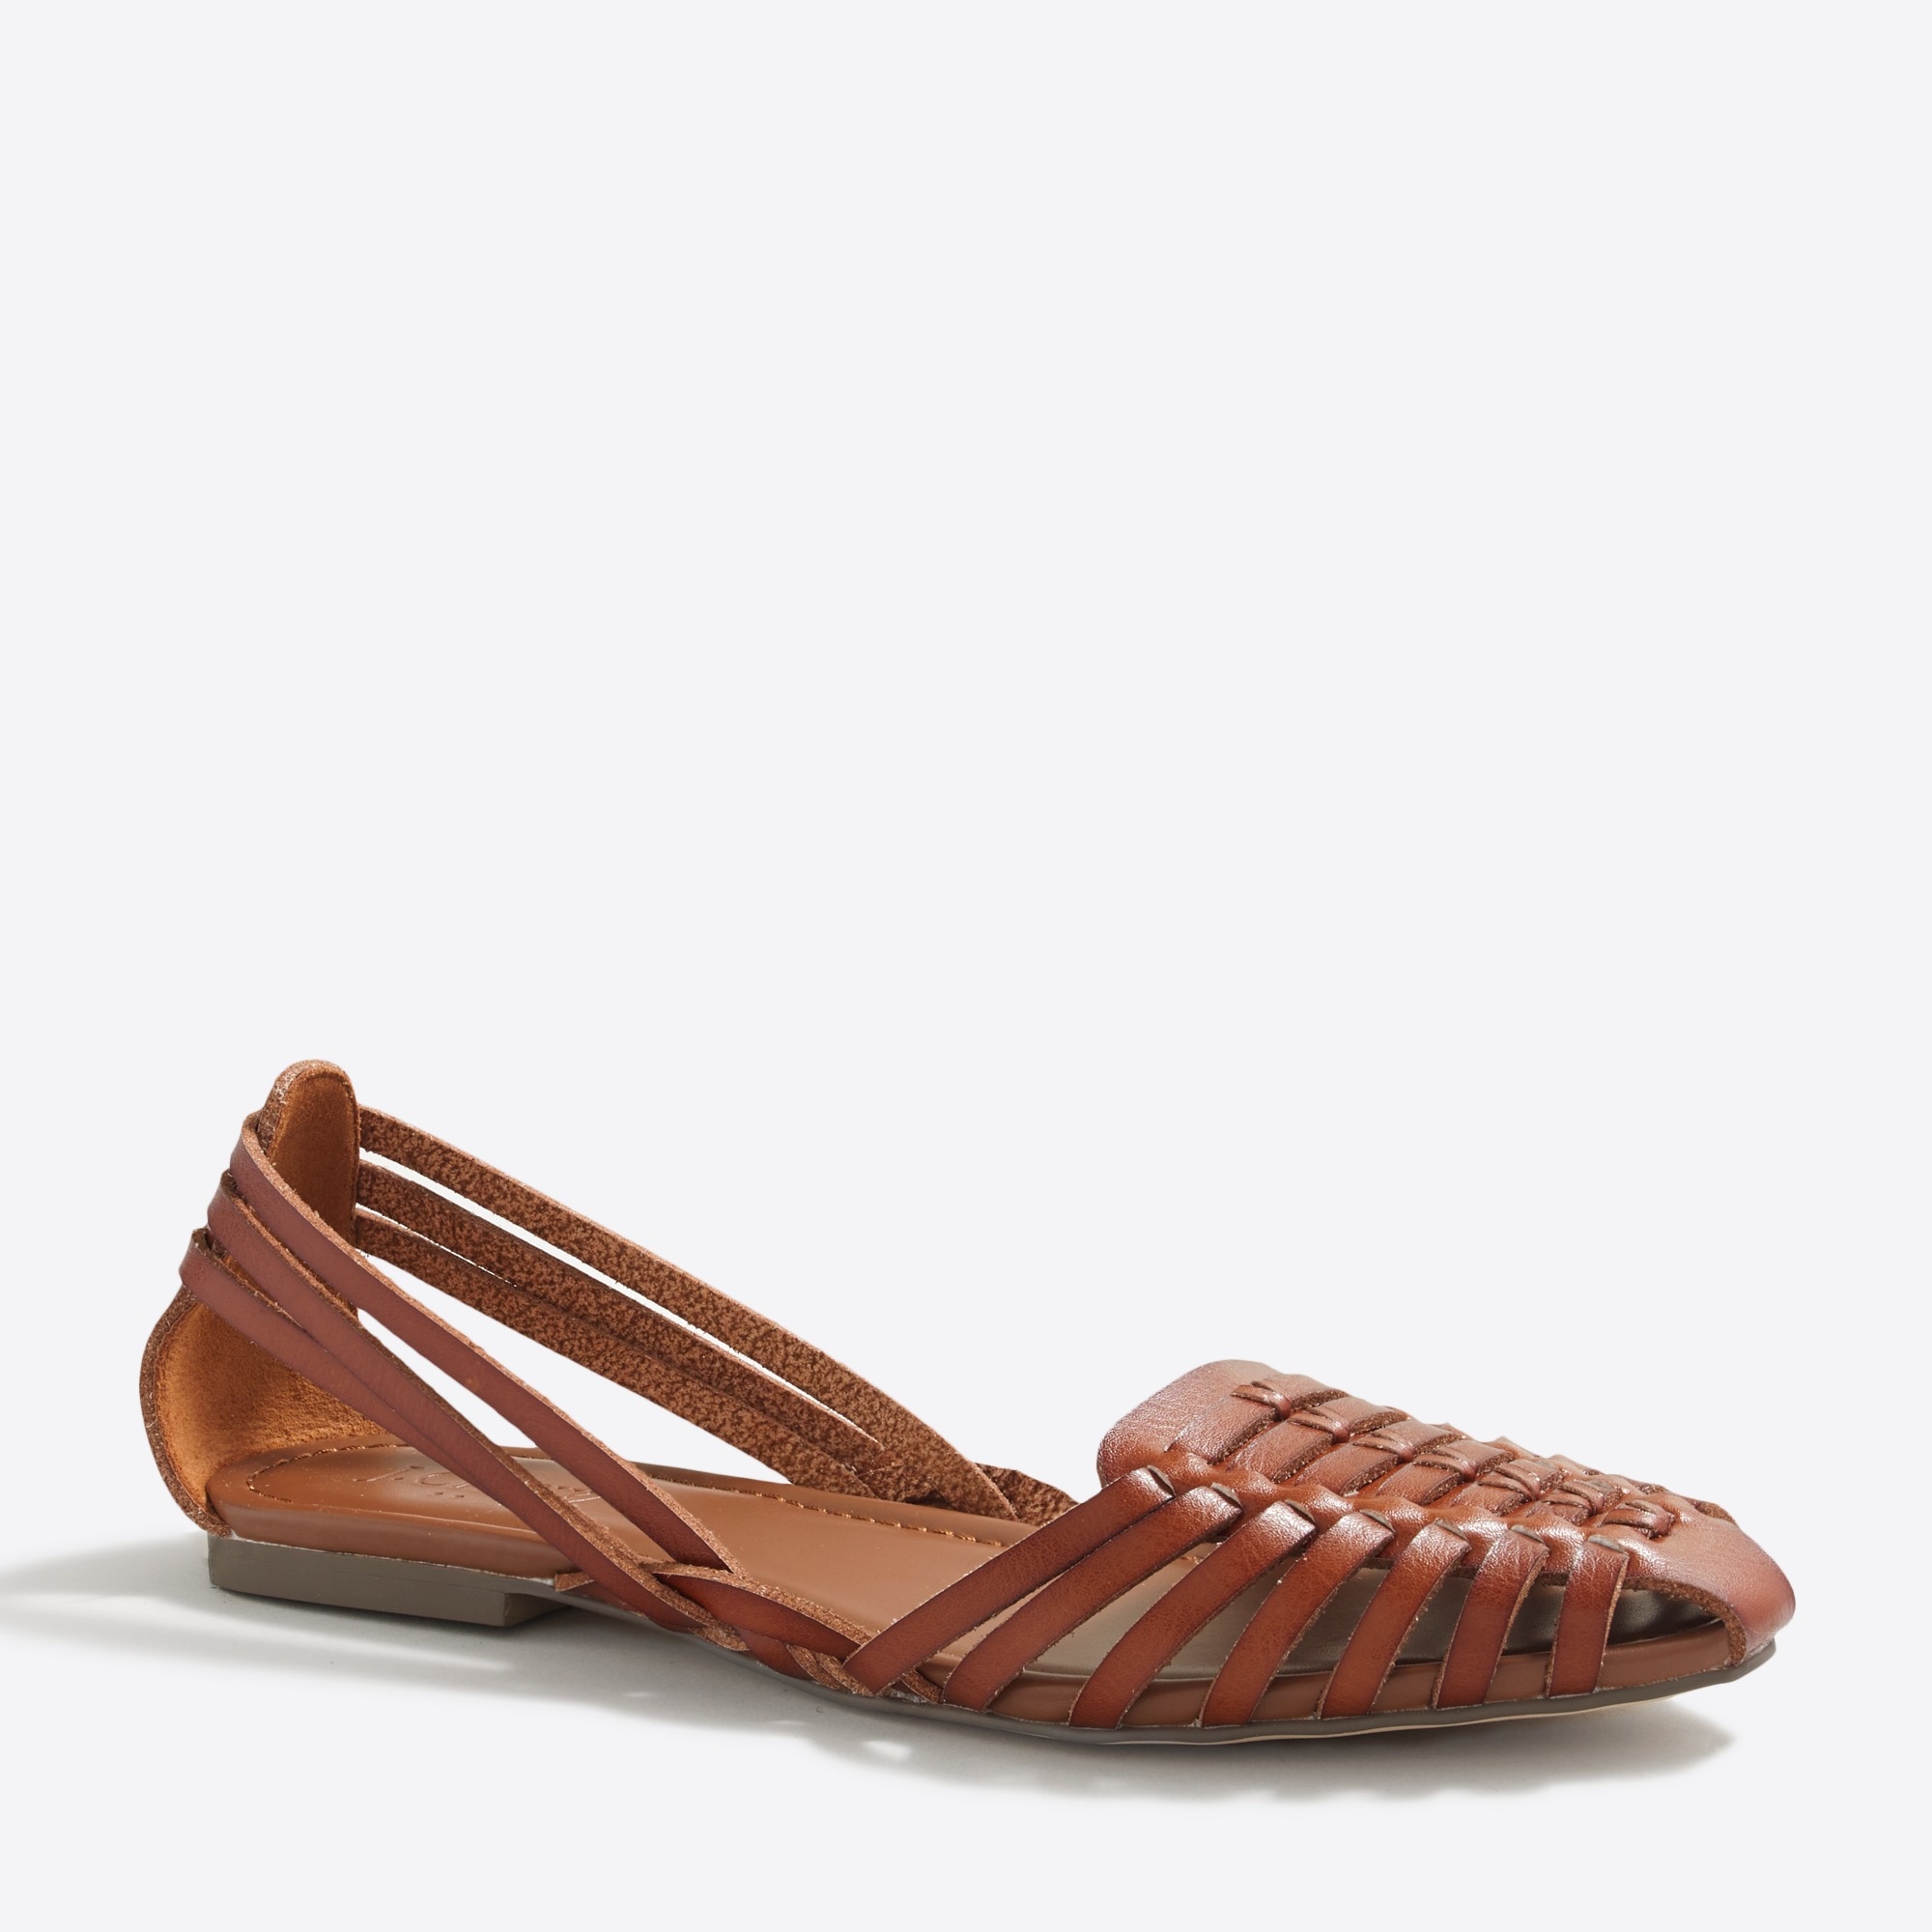 huaraches sandals for women